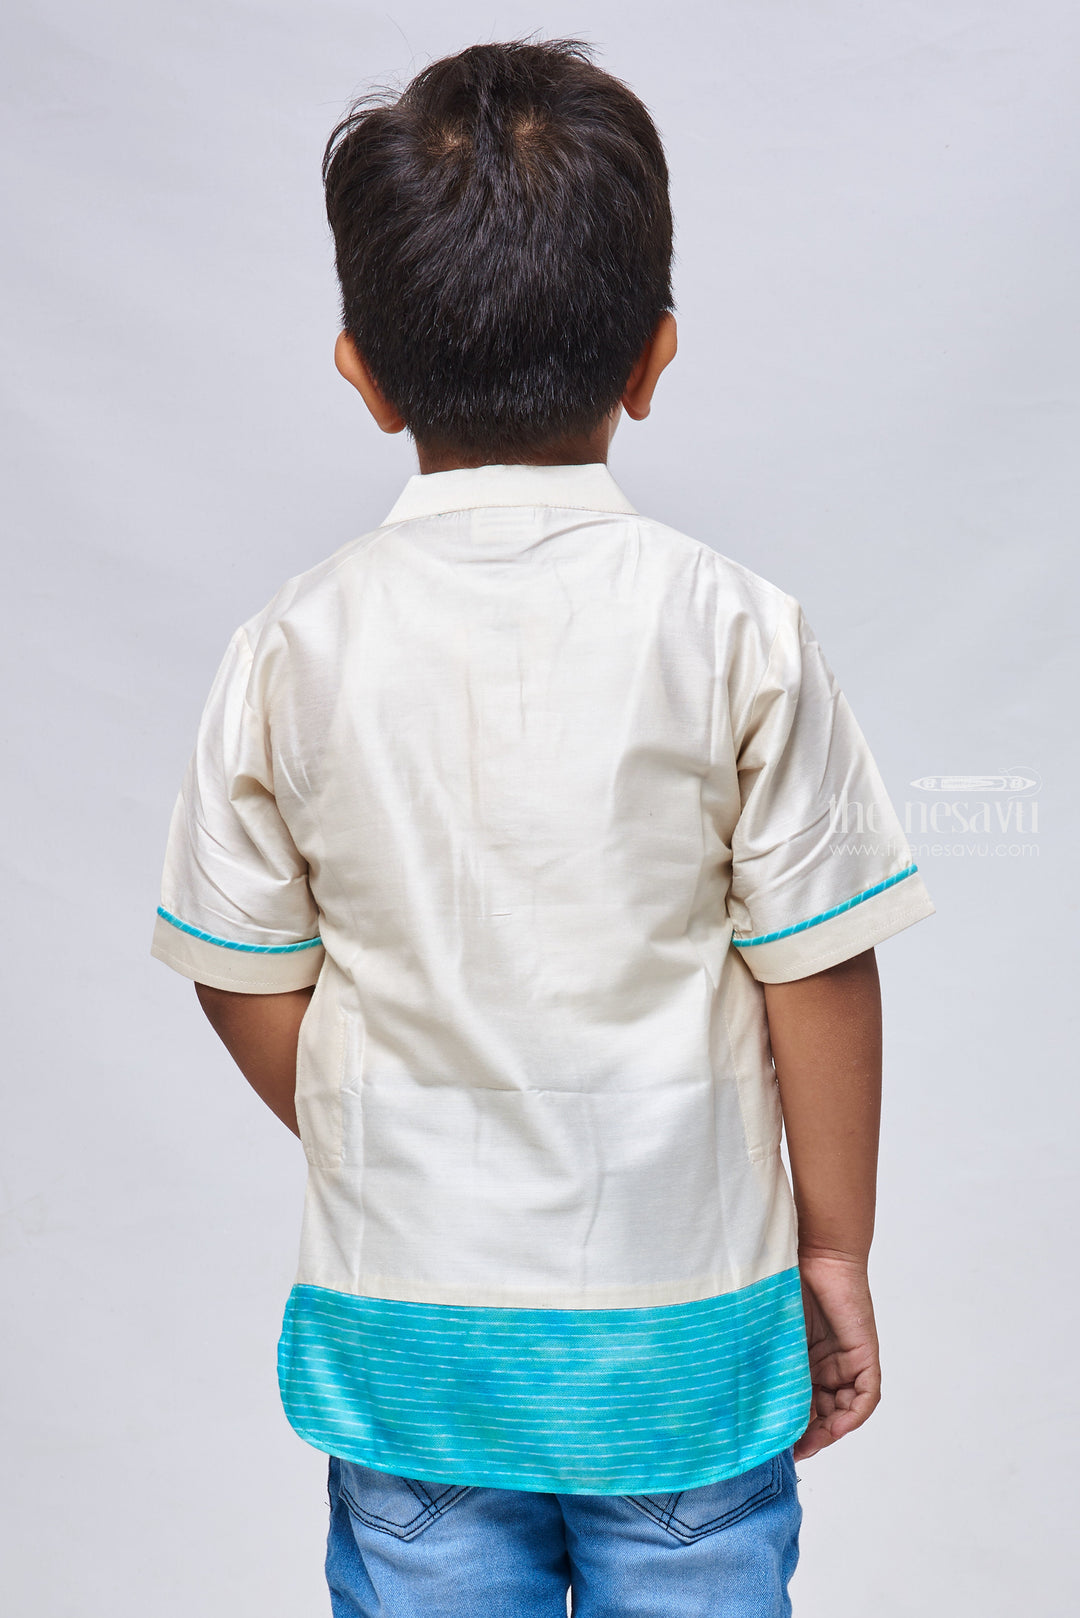 The Nesavu Boys Kurtha Shirt Matching Dad and Son Shirts - Crisp Elegance Half White Mandarin Collar Party Wear Shirt for Boys Nesavu Elegant Indian Kurta Shirts | Traditional and Modern Styles for Boys | The Nesavu